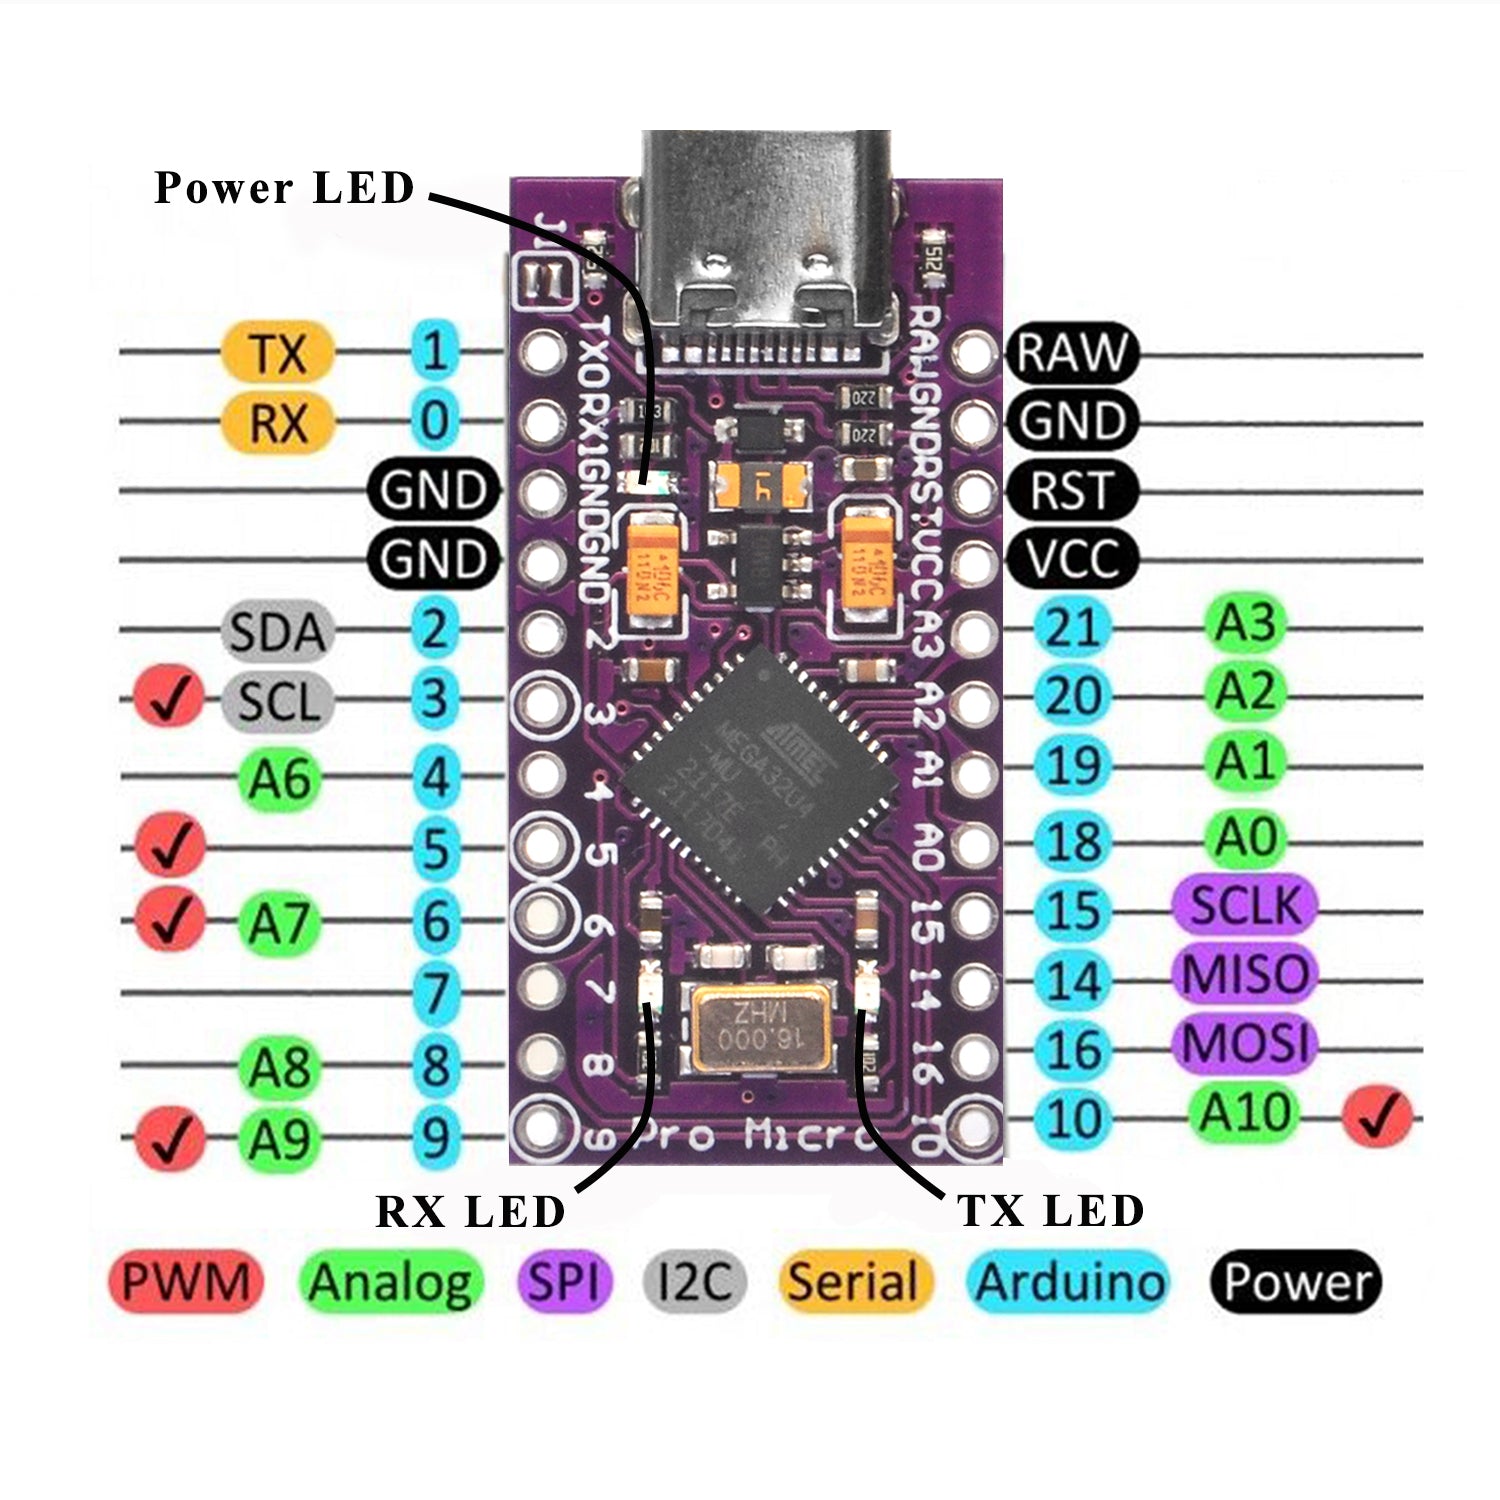 Getting started with the Pro Micro Arduino Board Leonardo